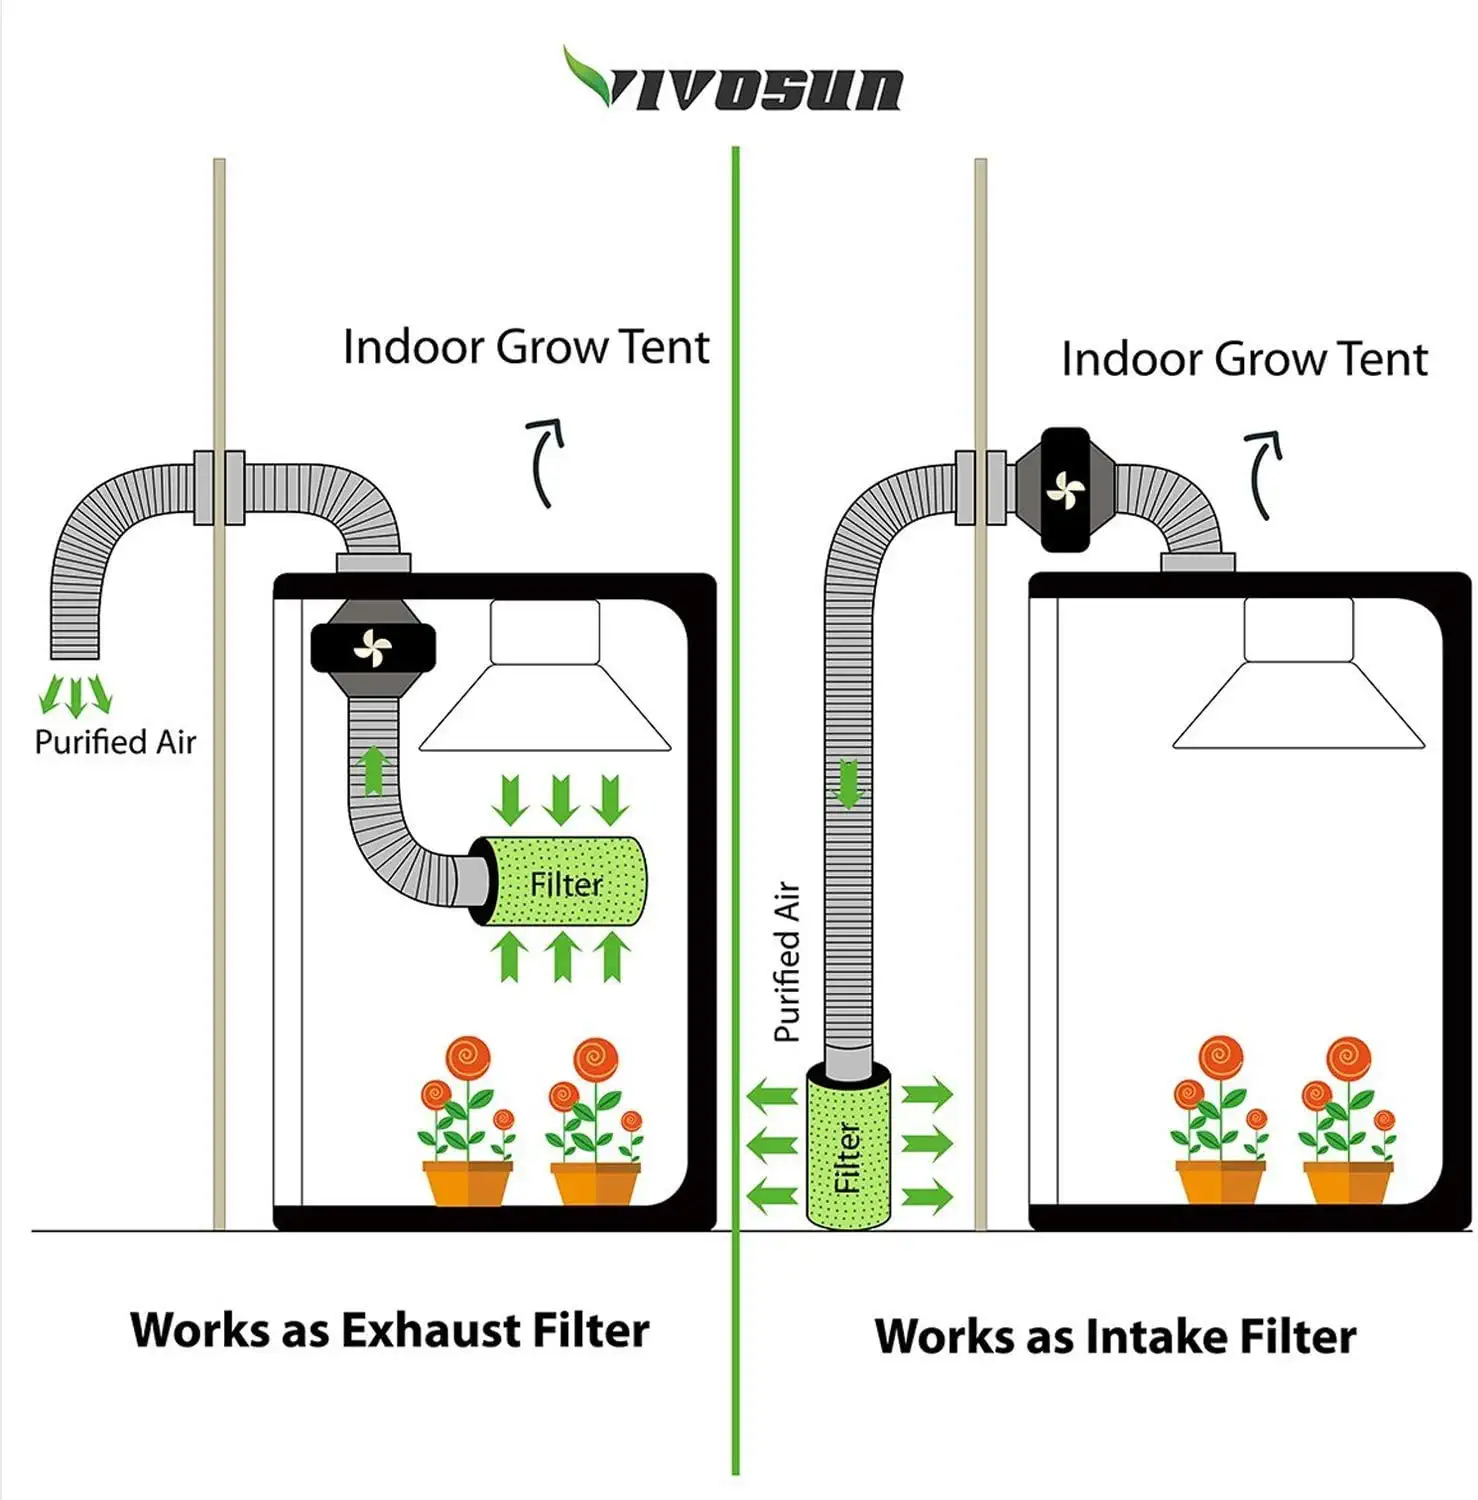 How to Set Up Grow Tent Ventilation?